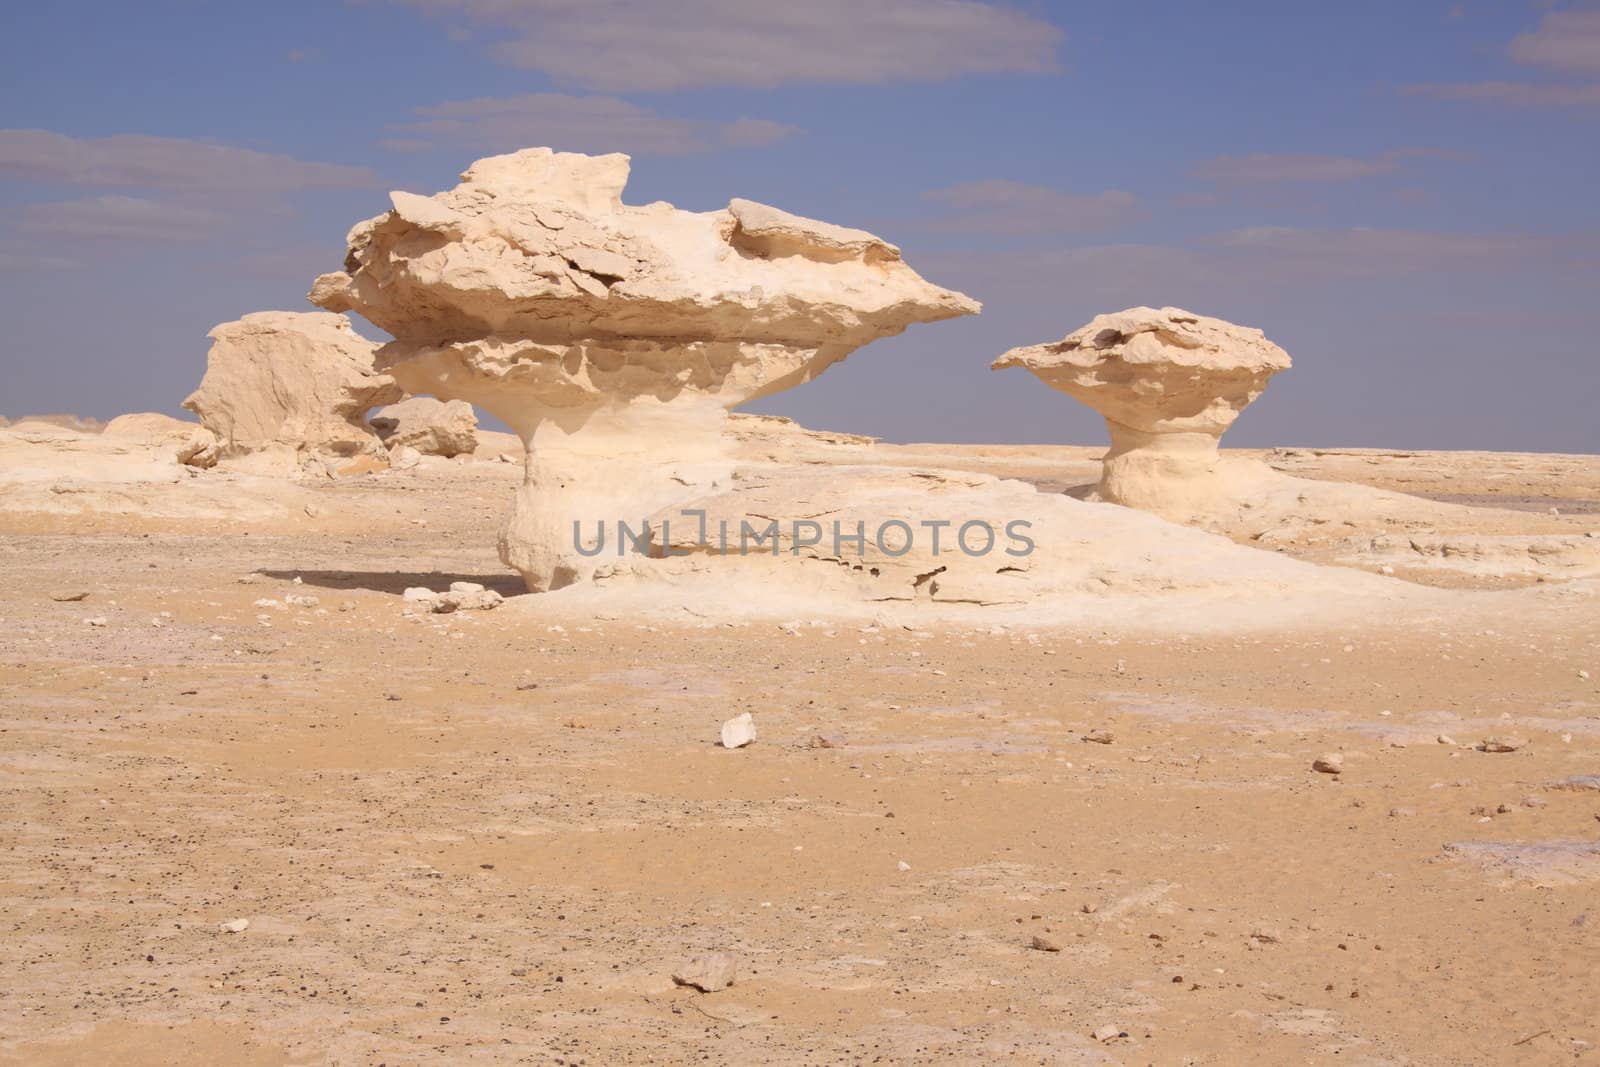 Whitte desert statue by jnerad